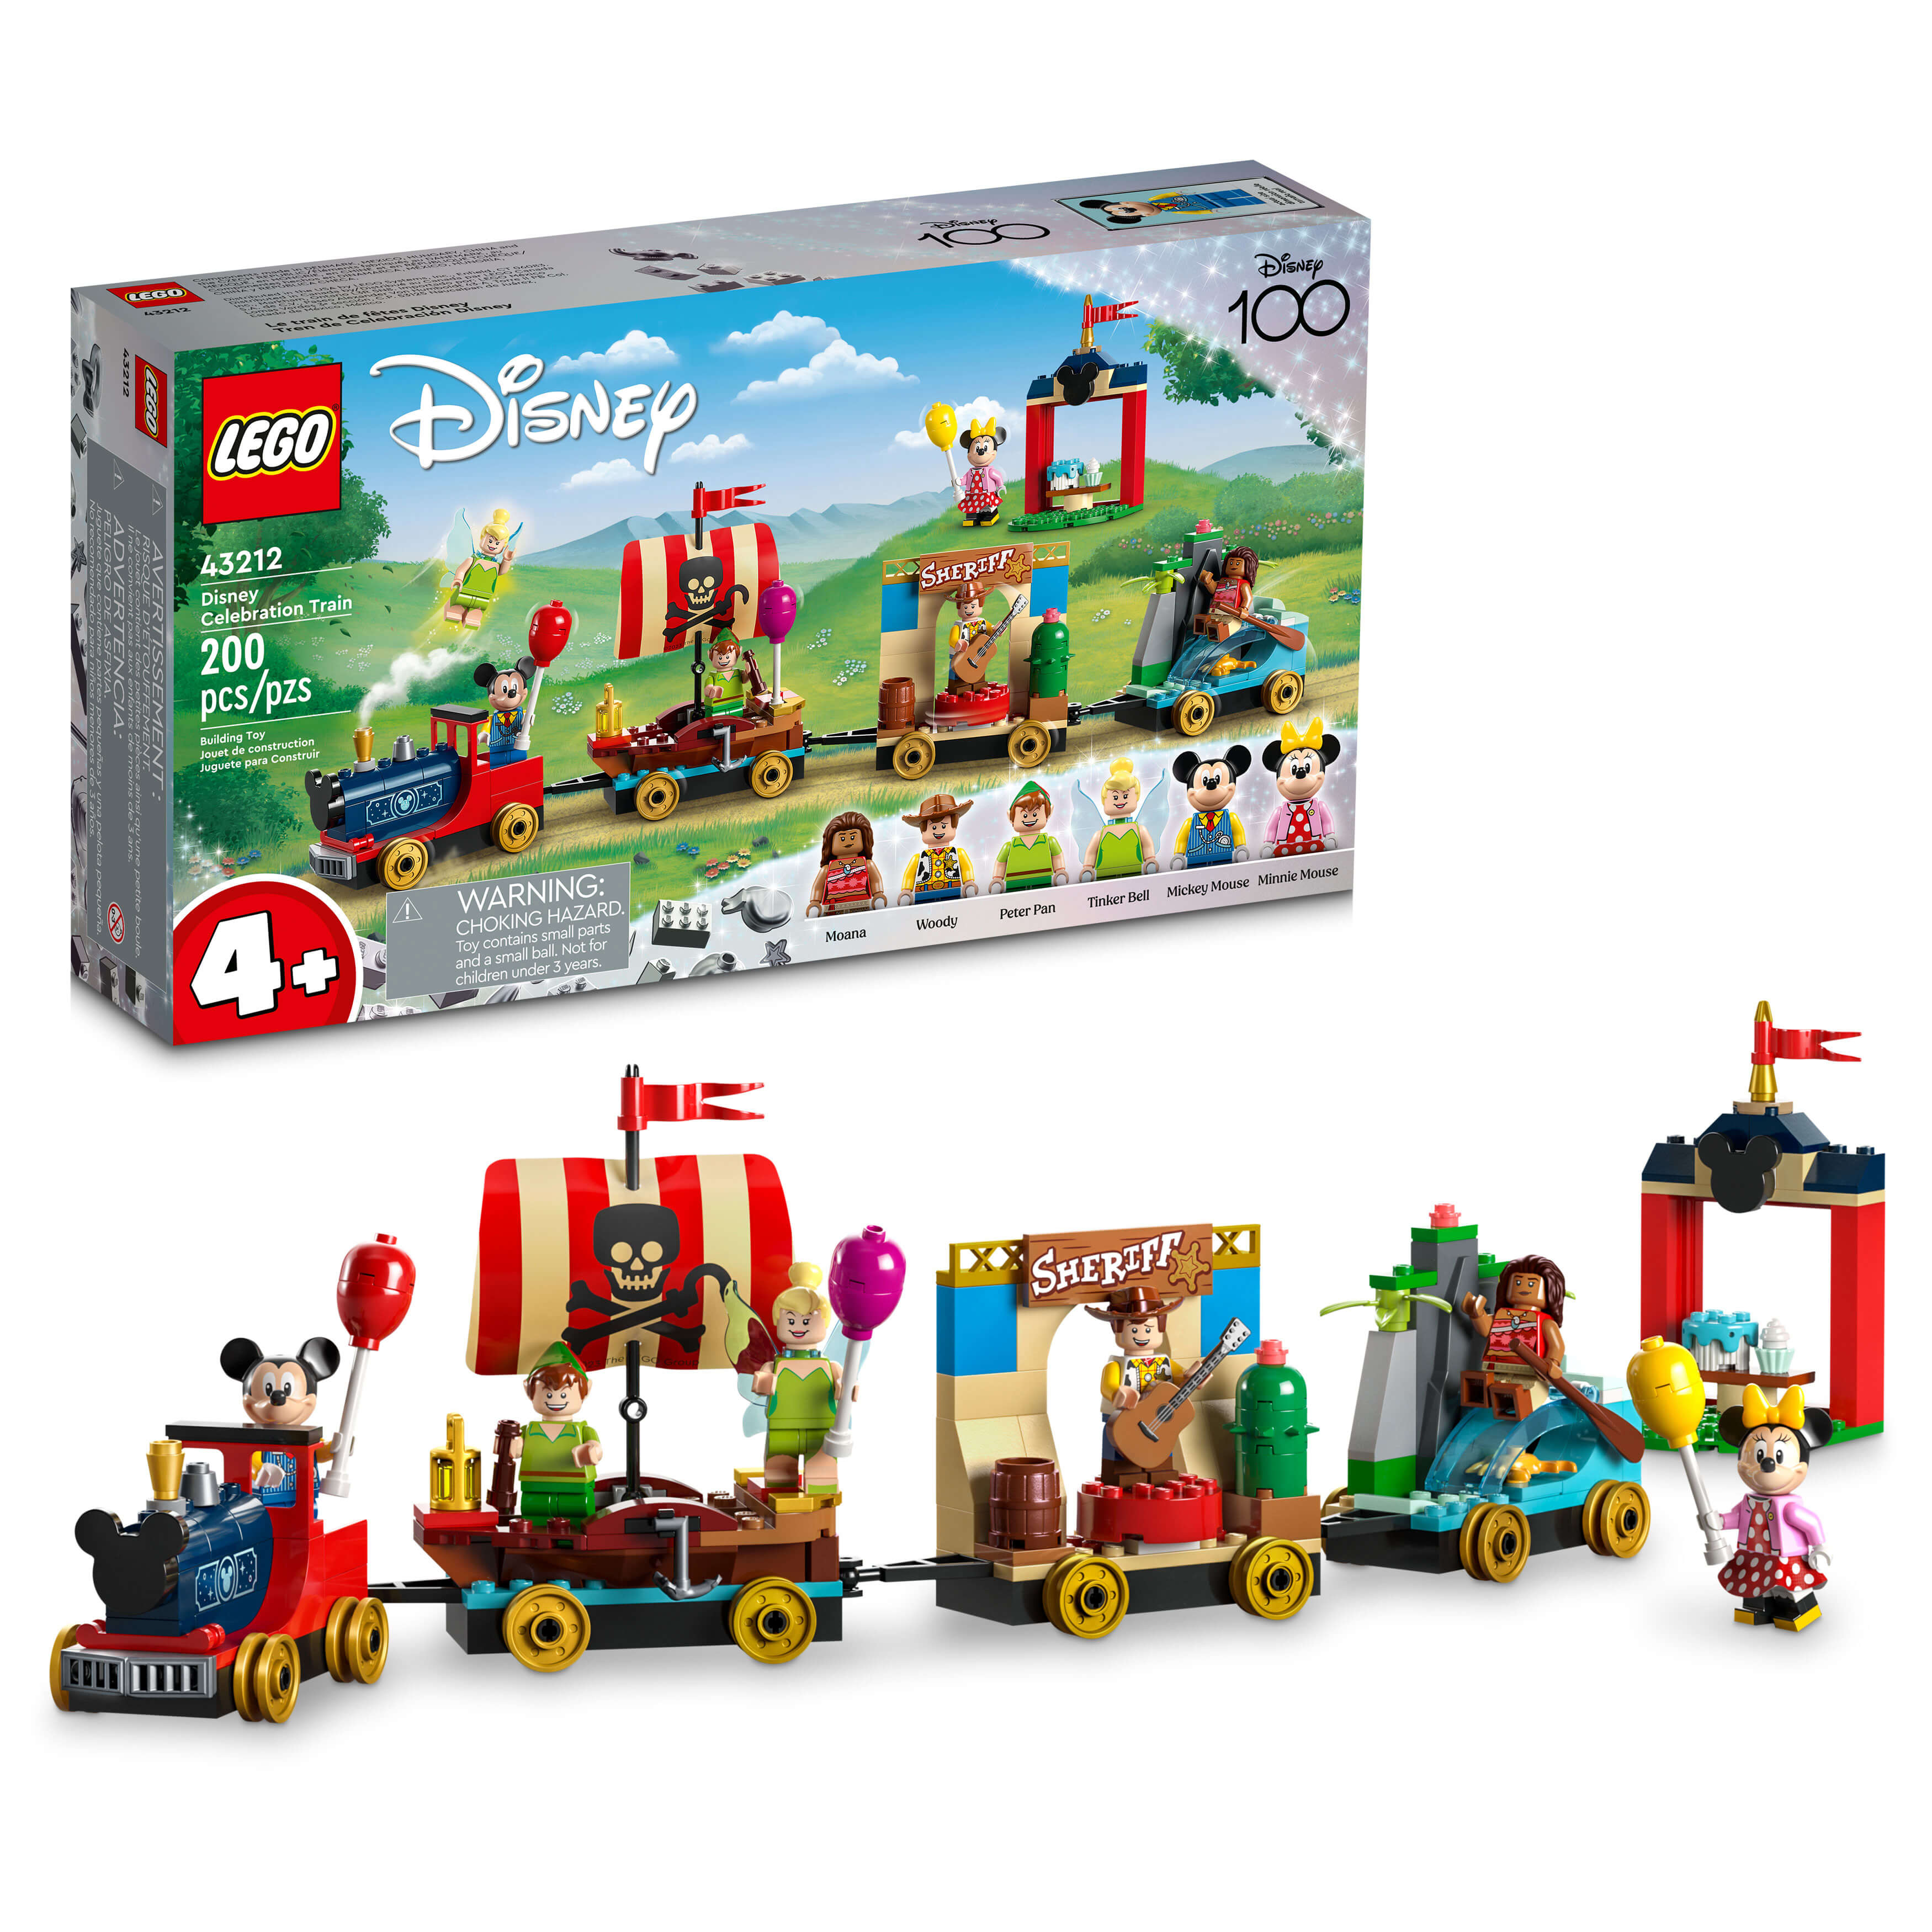 LEGO® Disney: Disney Celebration Train 43212 Building Toy Set (200 Pieces)